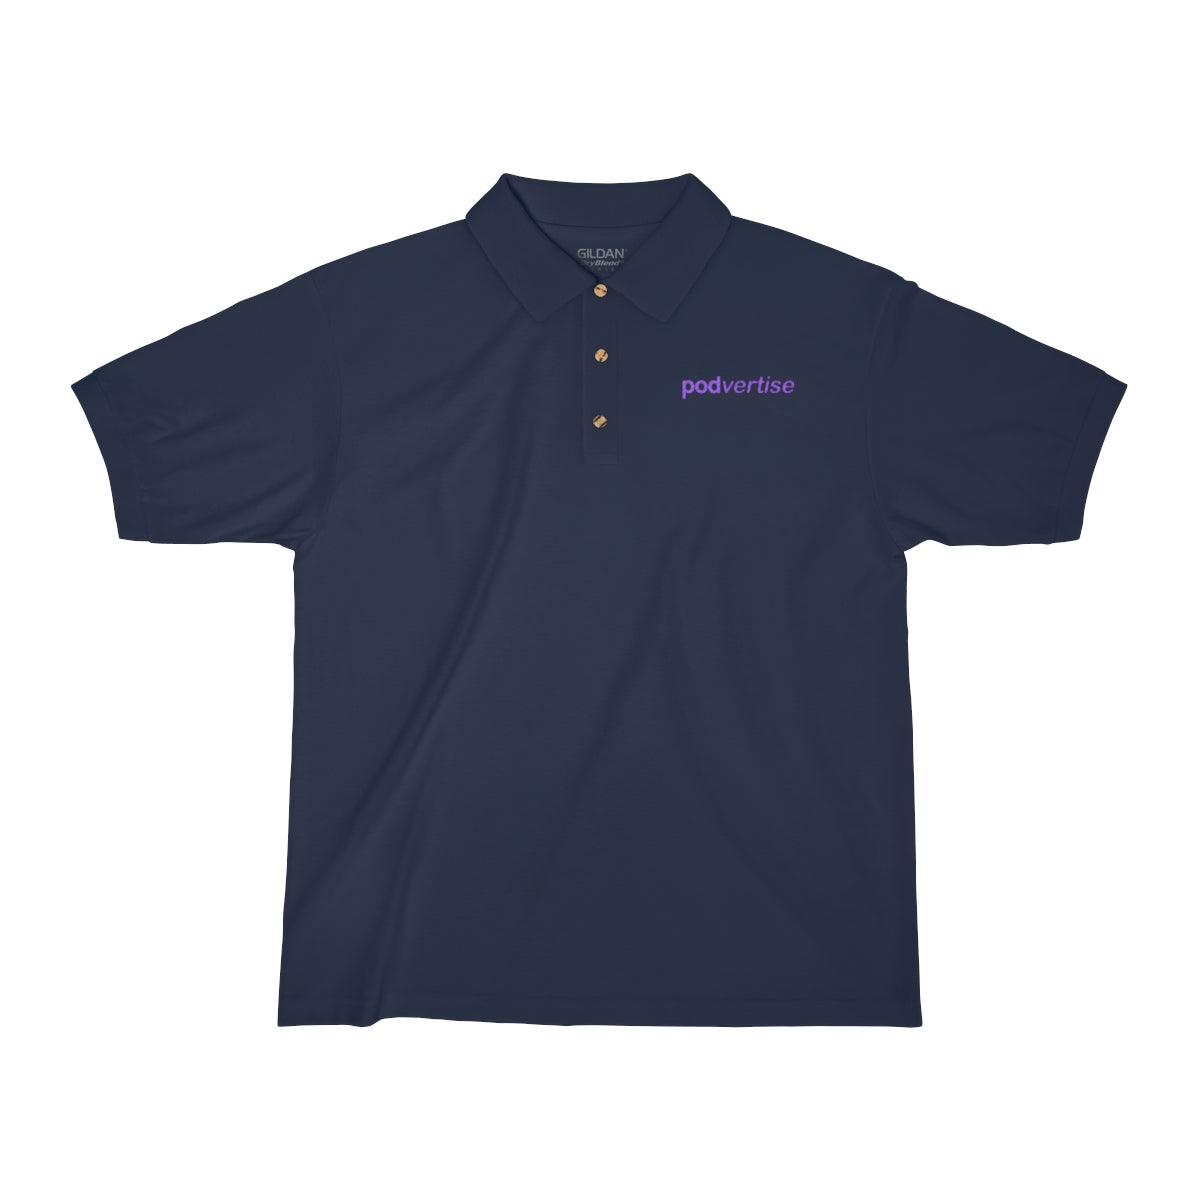 Podvertise Men's Jersey Polo Shirt (purple logo embroided)